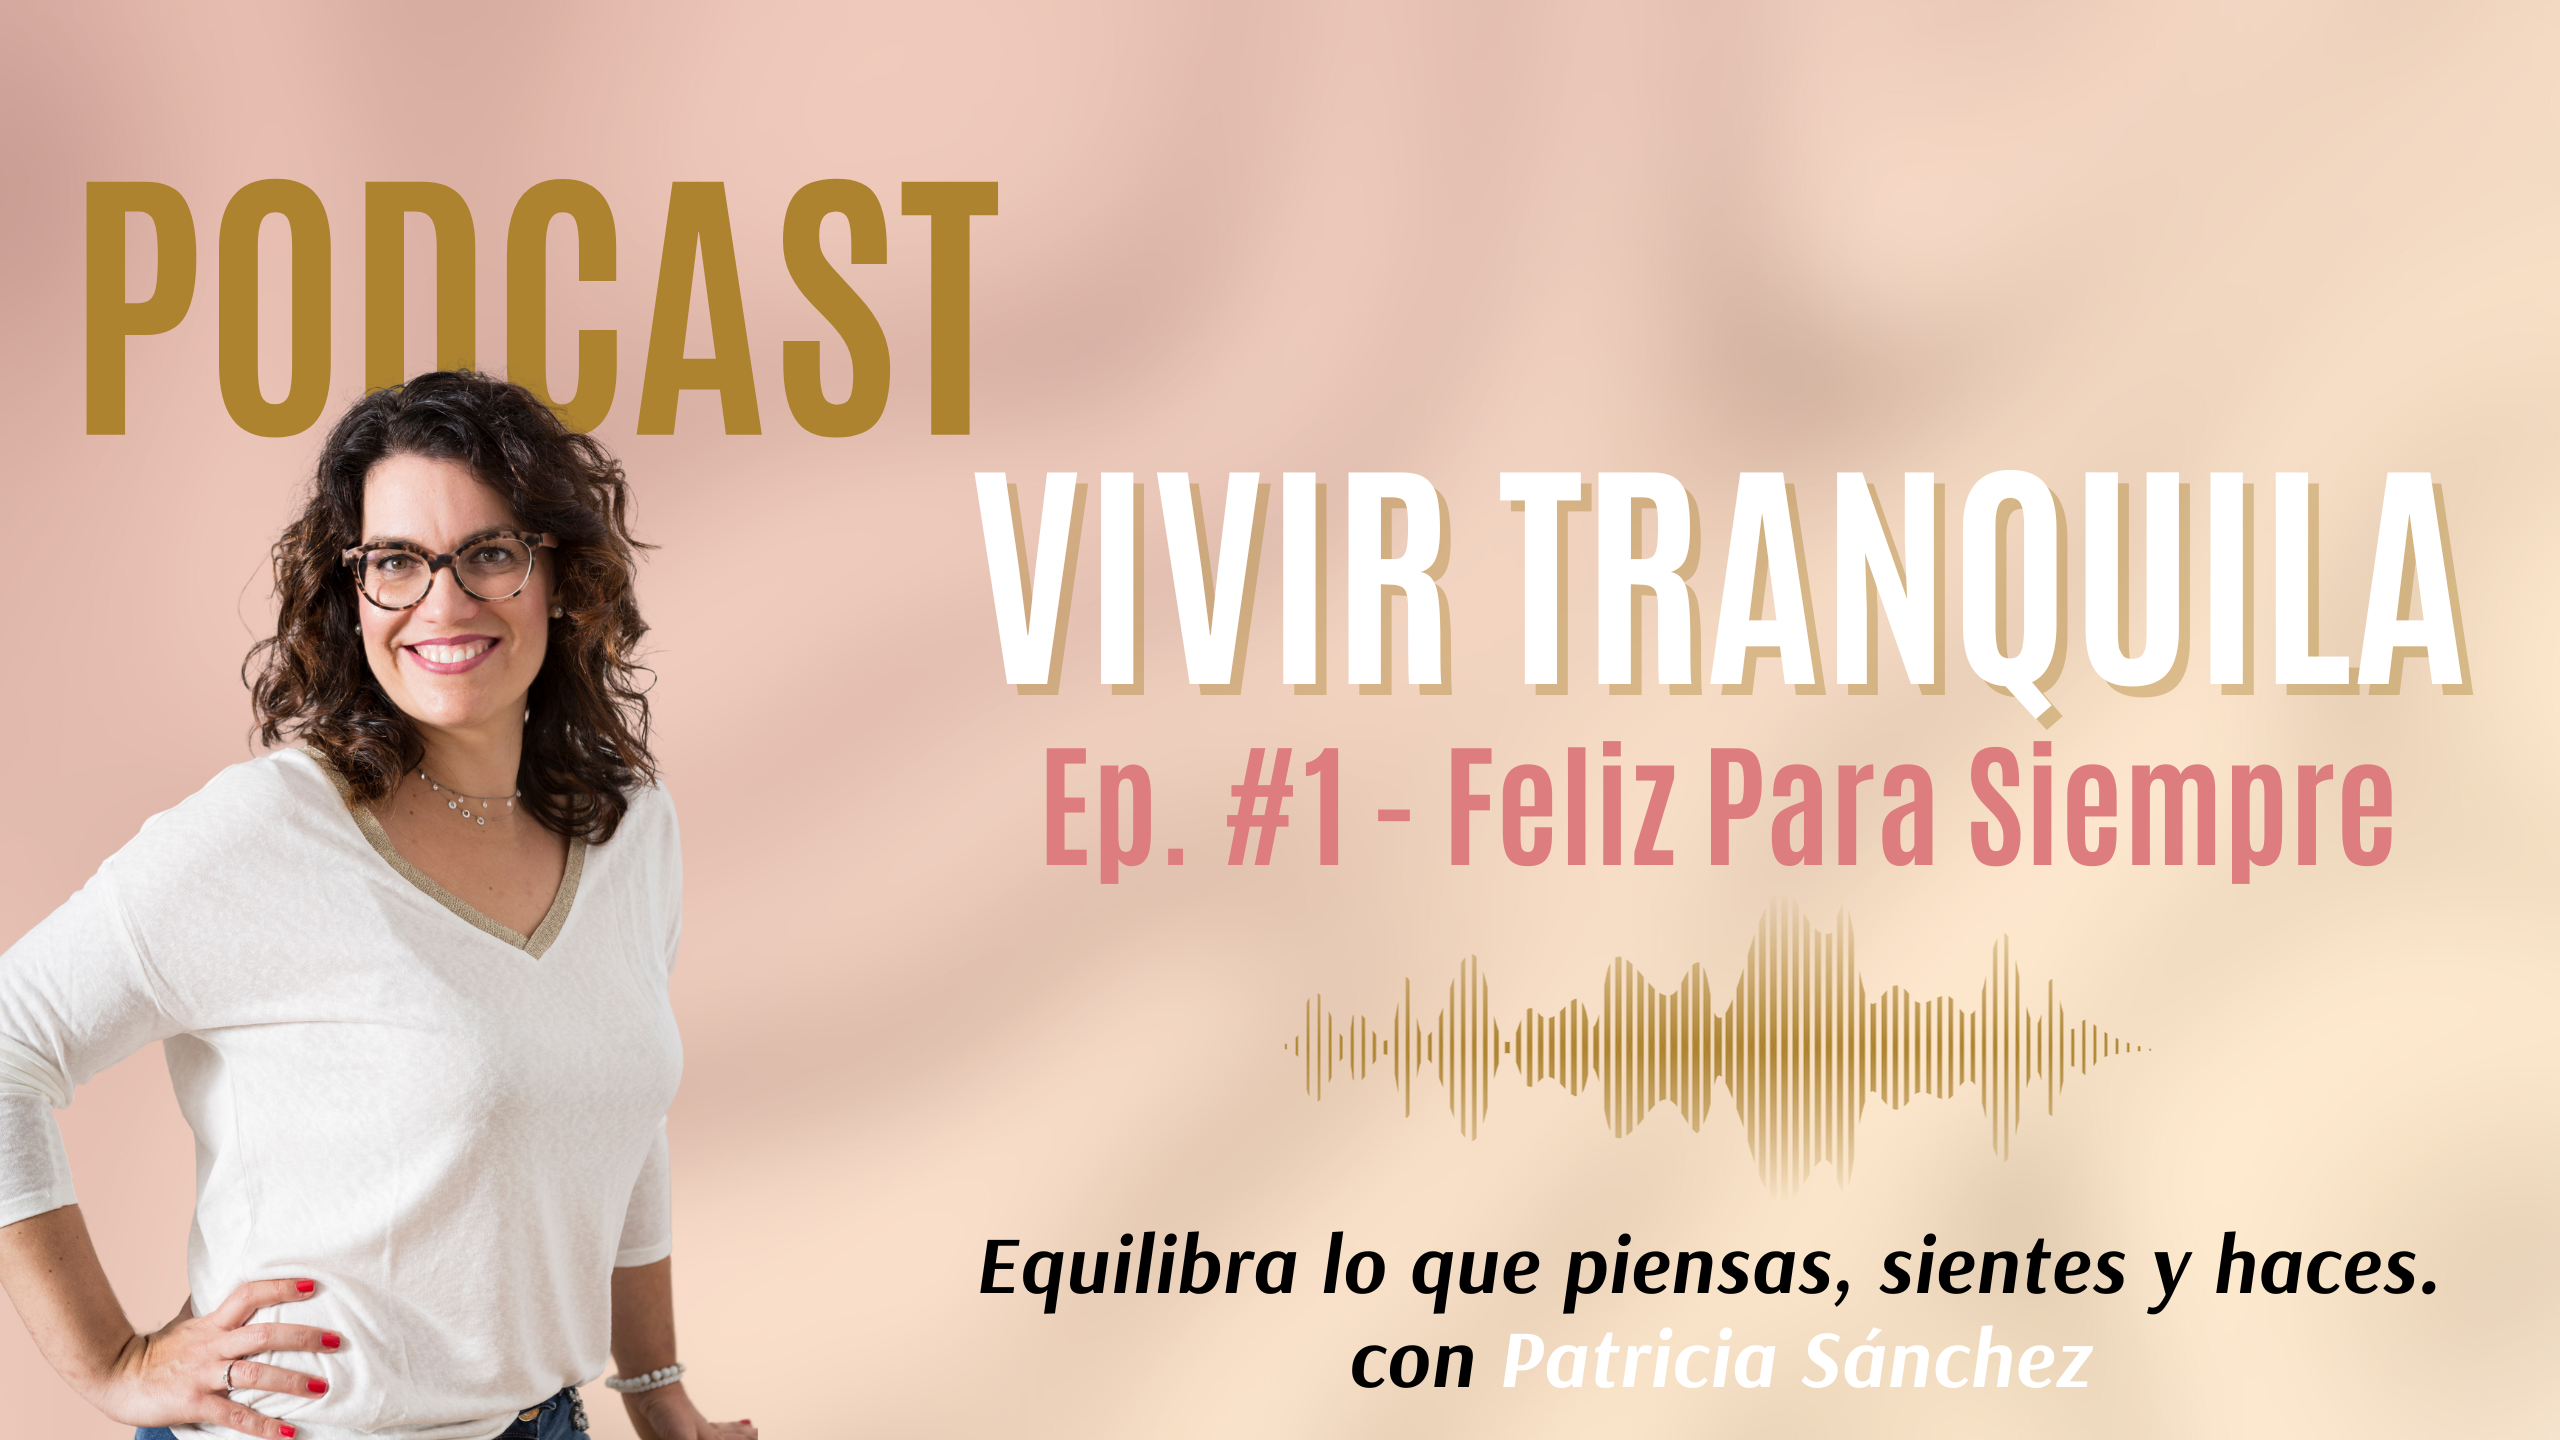 Patricia Sanchez Psicóloga Podcast Vivir Tranquila EP 1 Feliz para Siempre